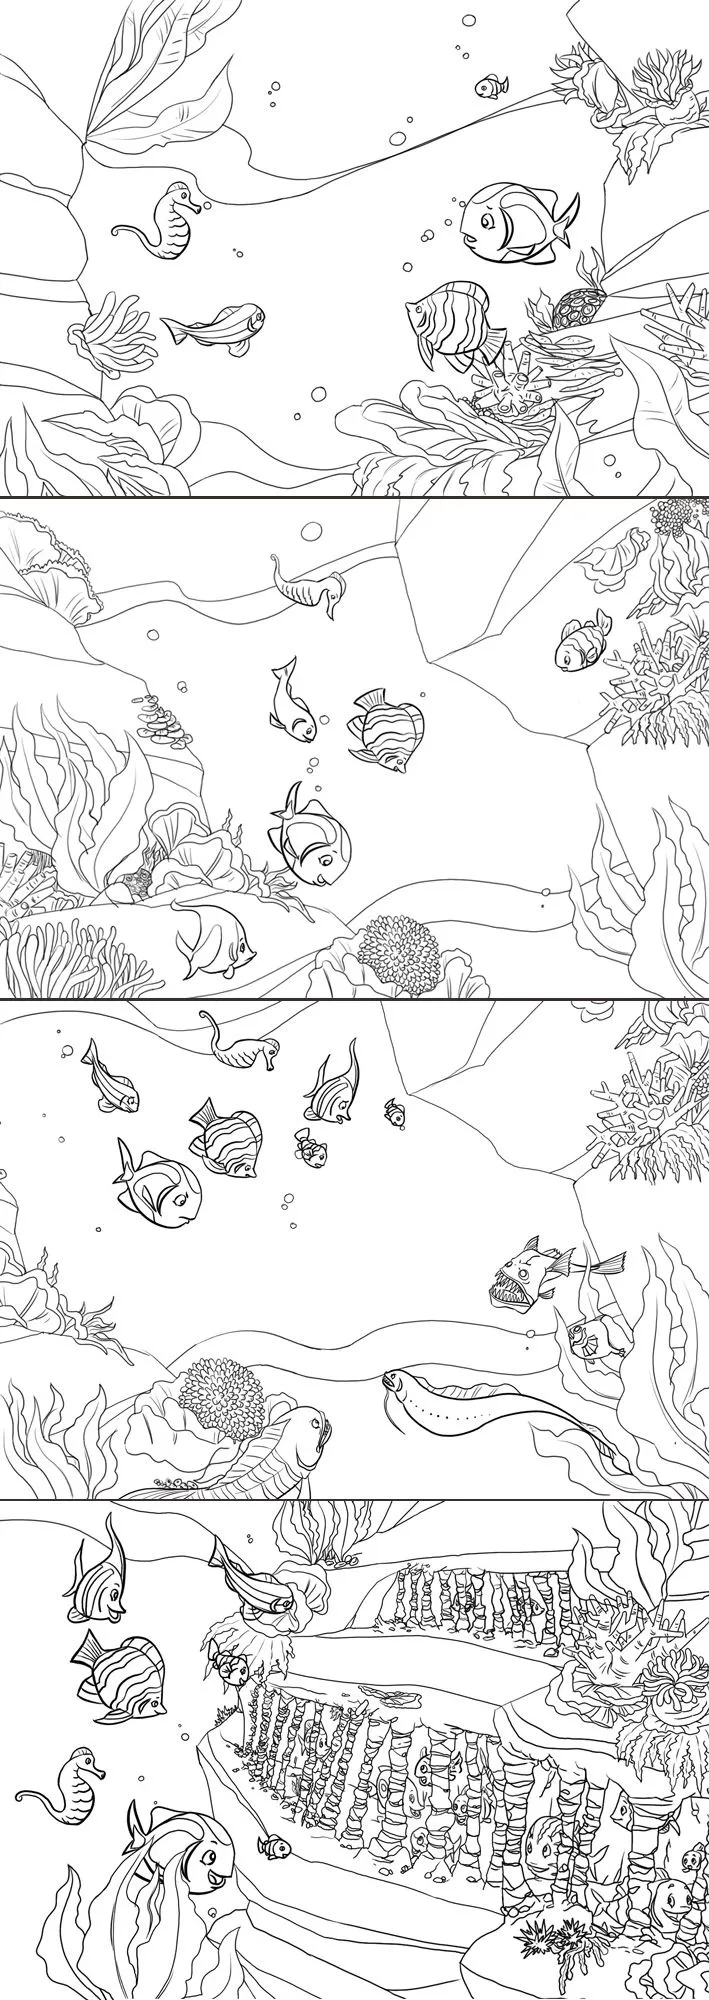 Dibujos de arrecifes de coral - Imagui